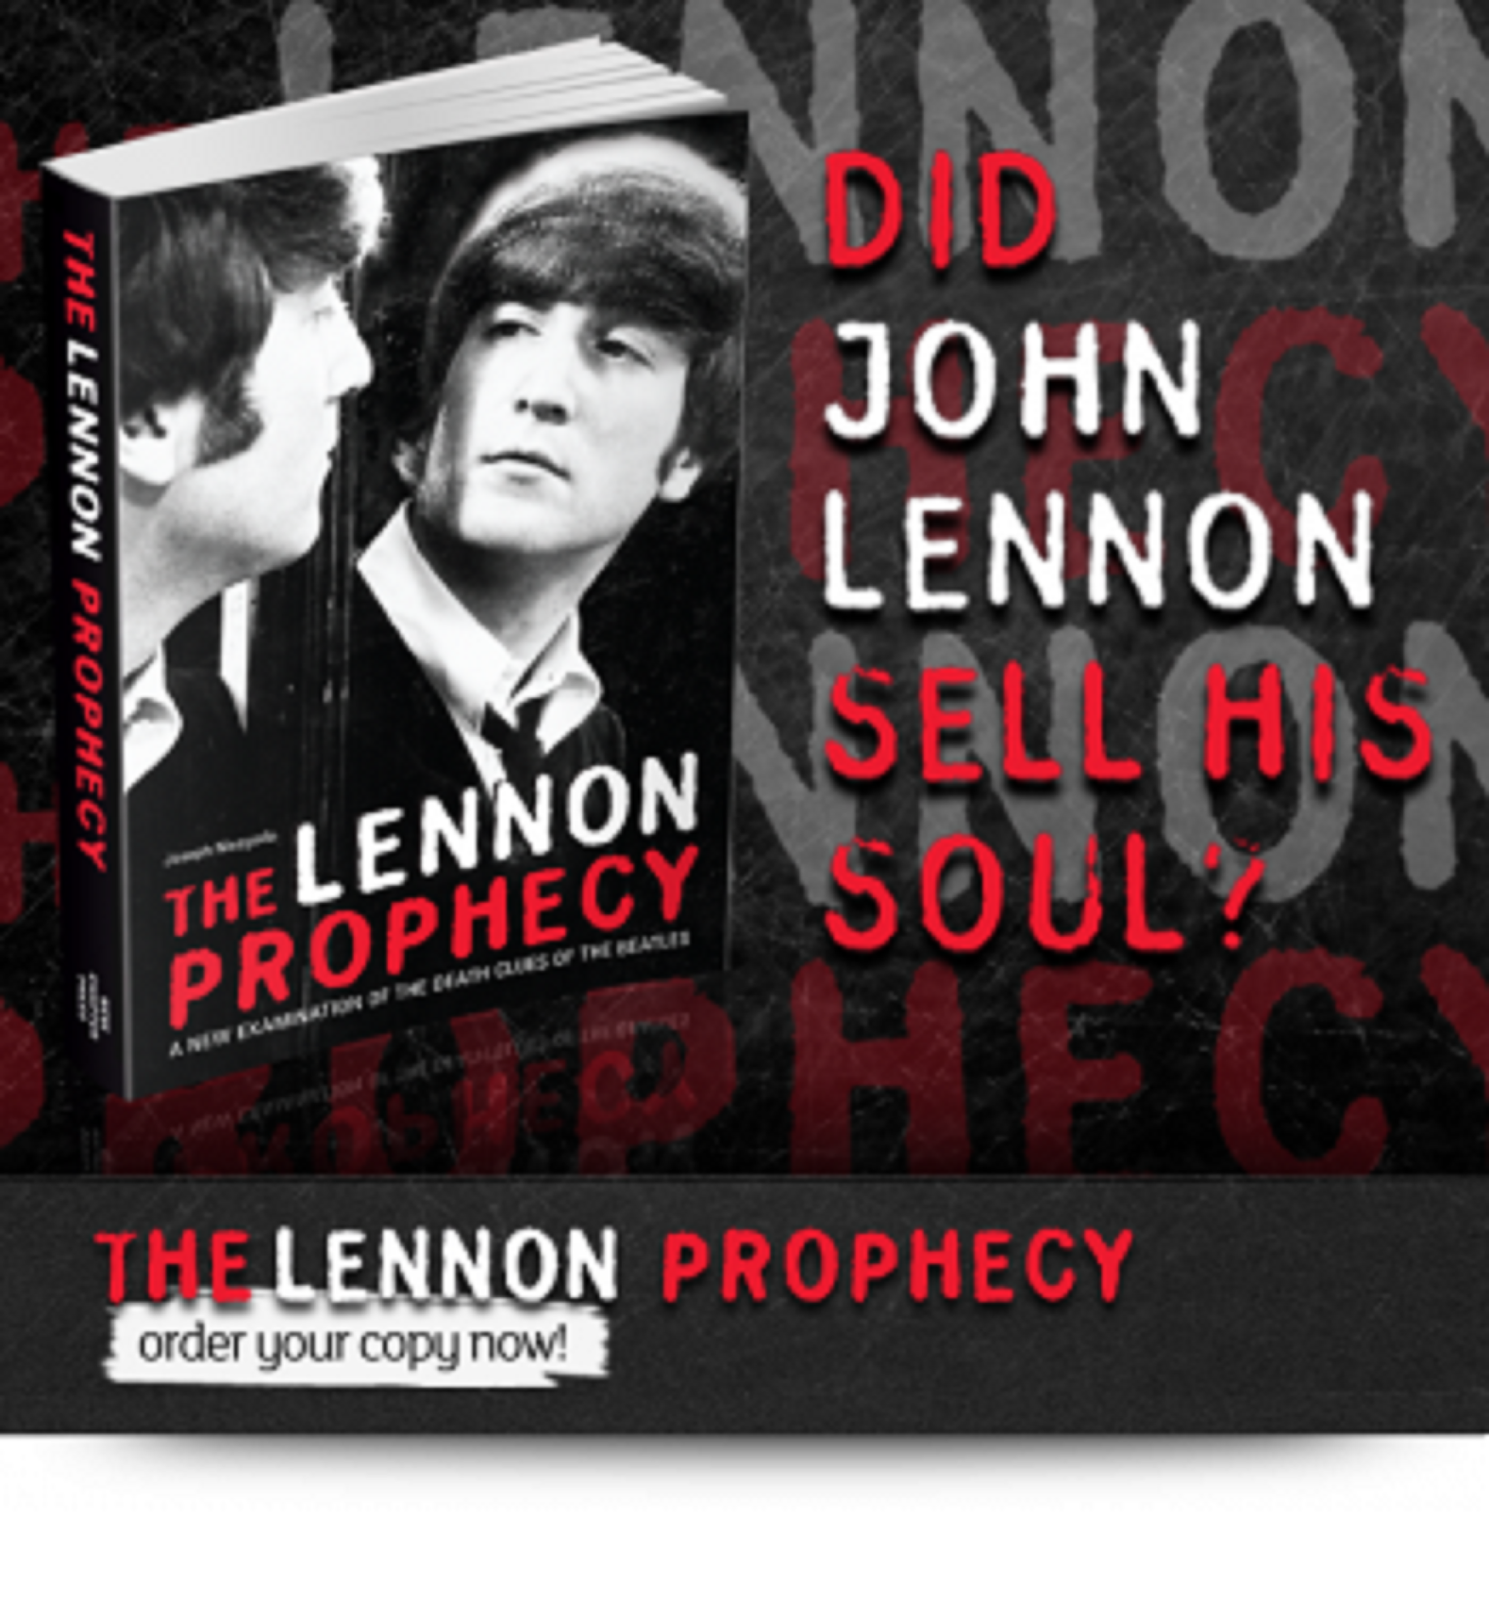 THE LENNON PROPHECY